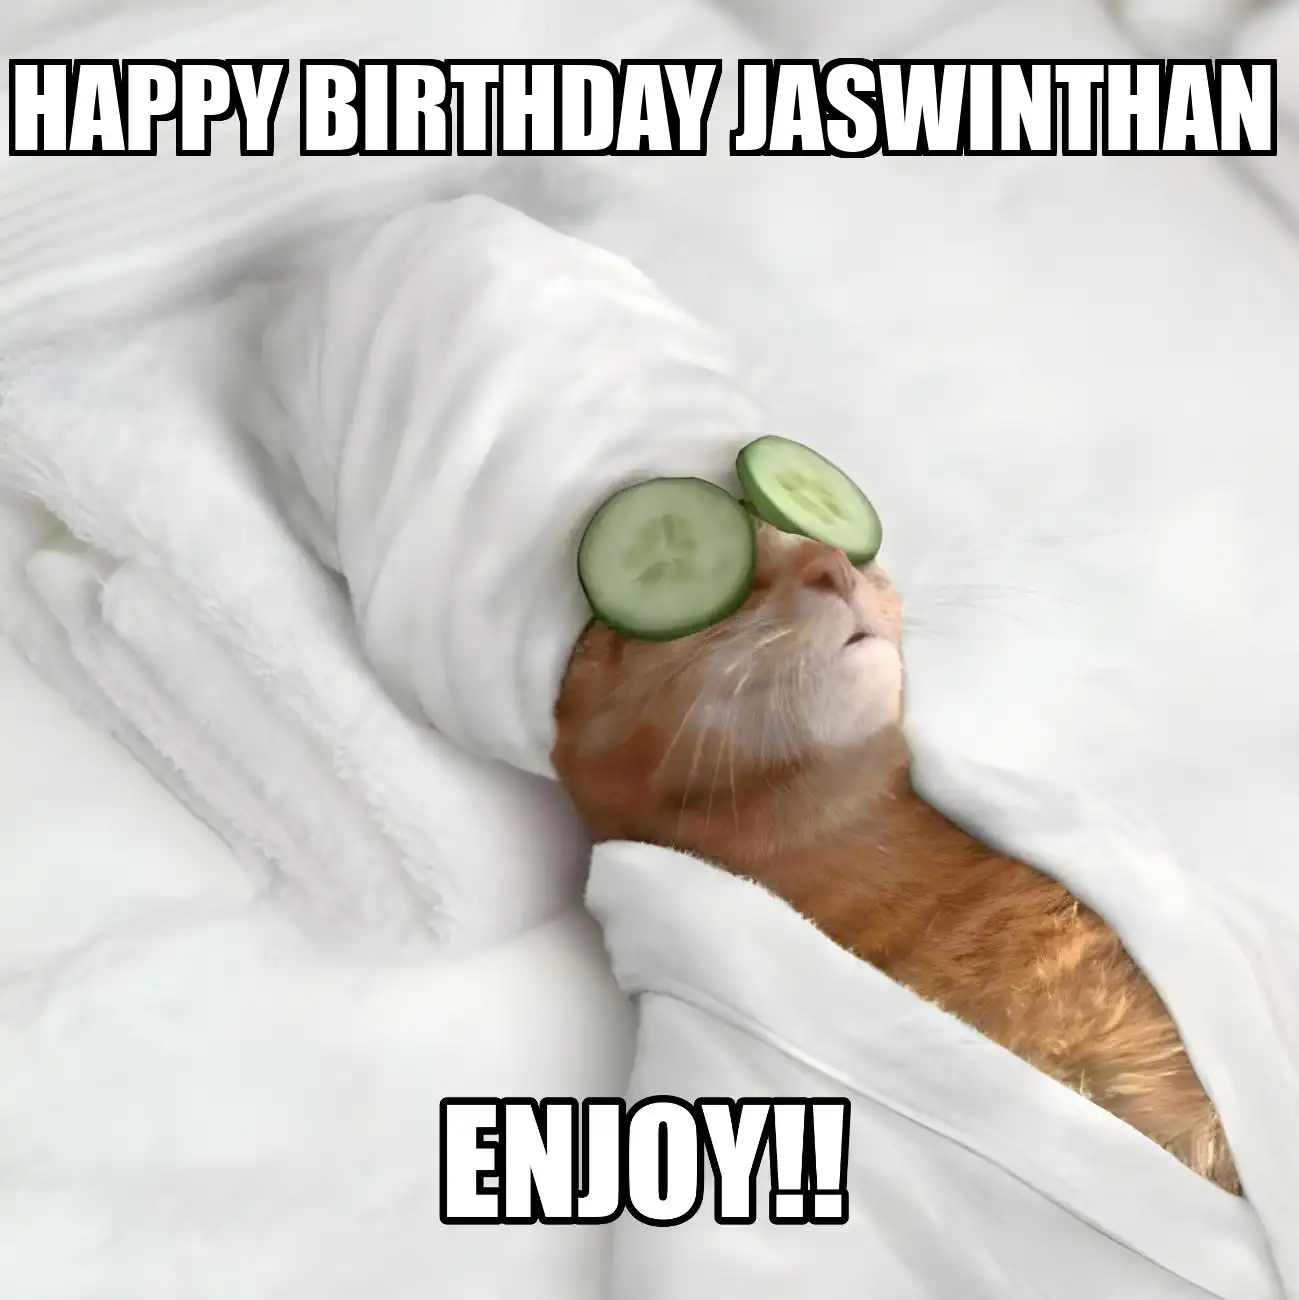 Happy Birthday Jaswinthan Enjoy Cat Meme